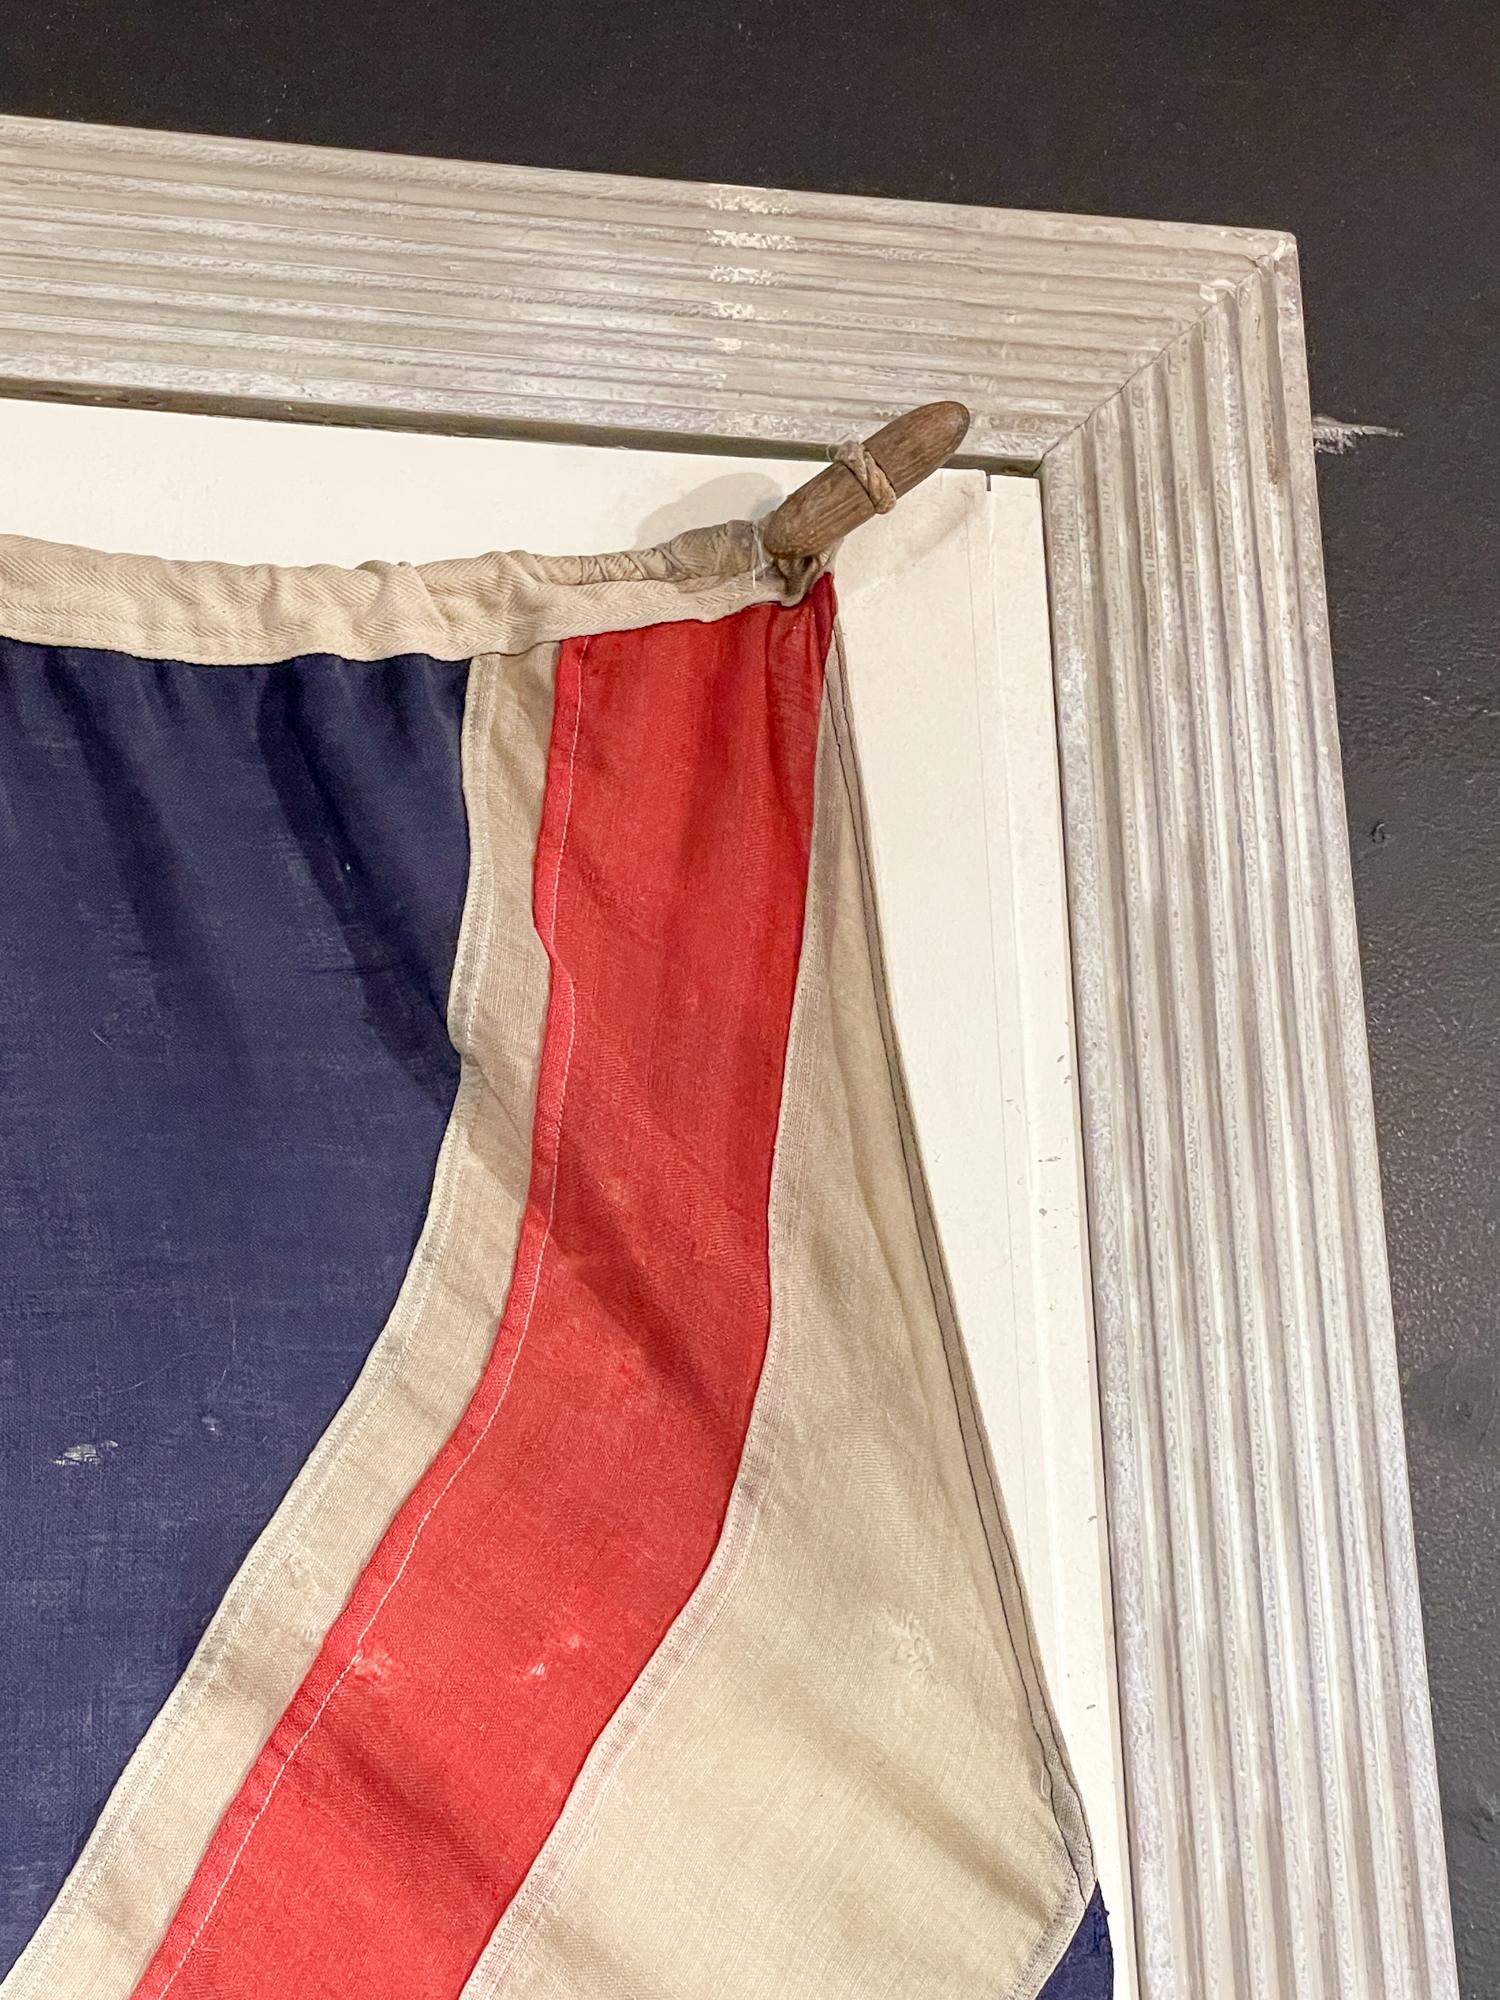 Cotton Antique Union Jack Flag in Greige Finished Fluted Wood Frame